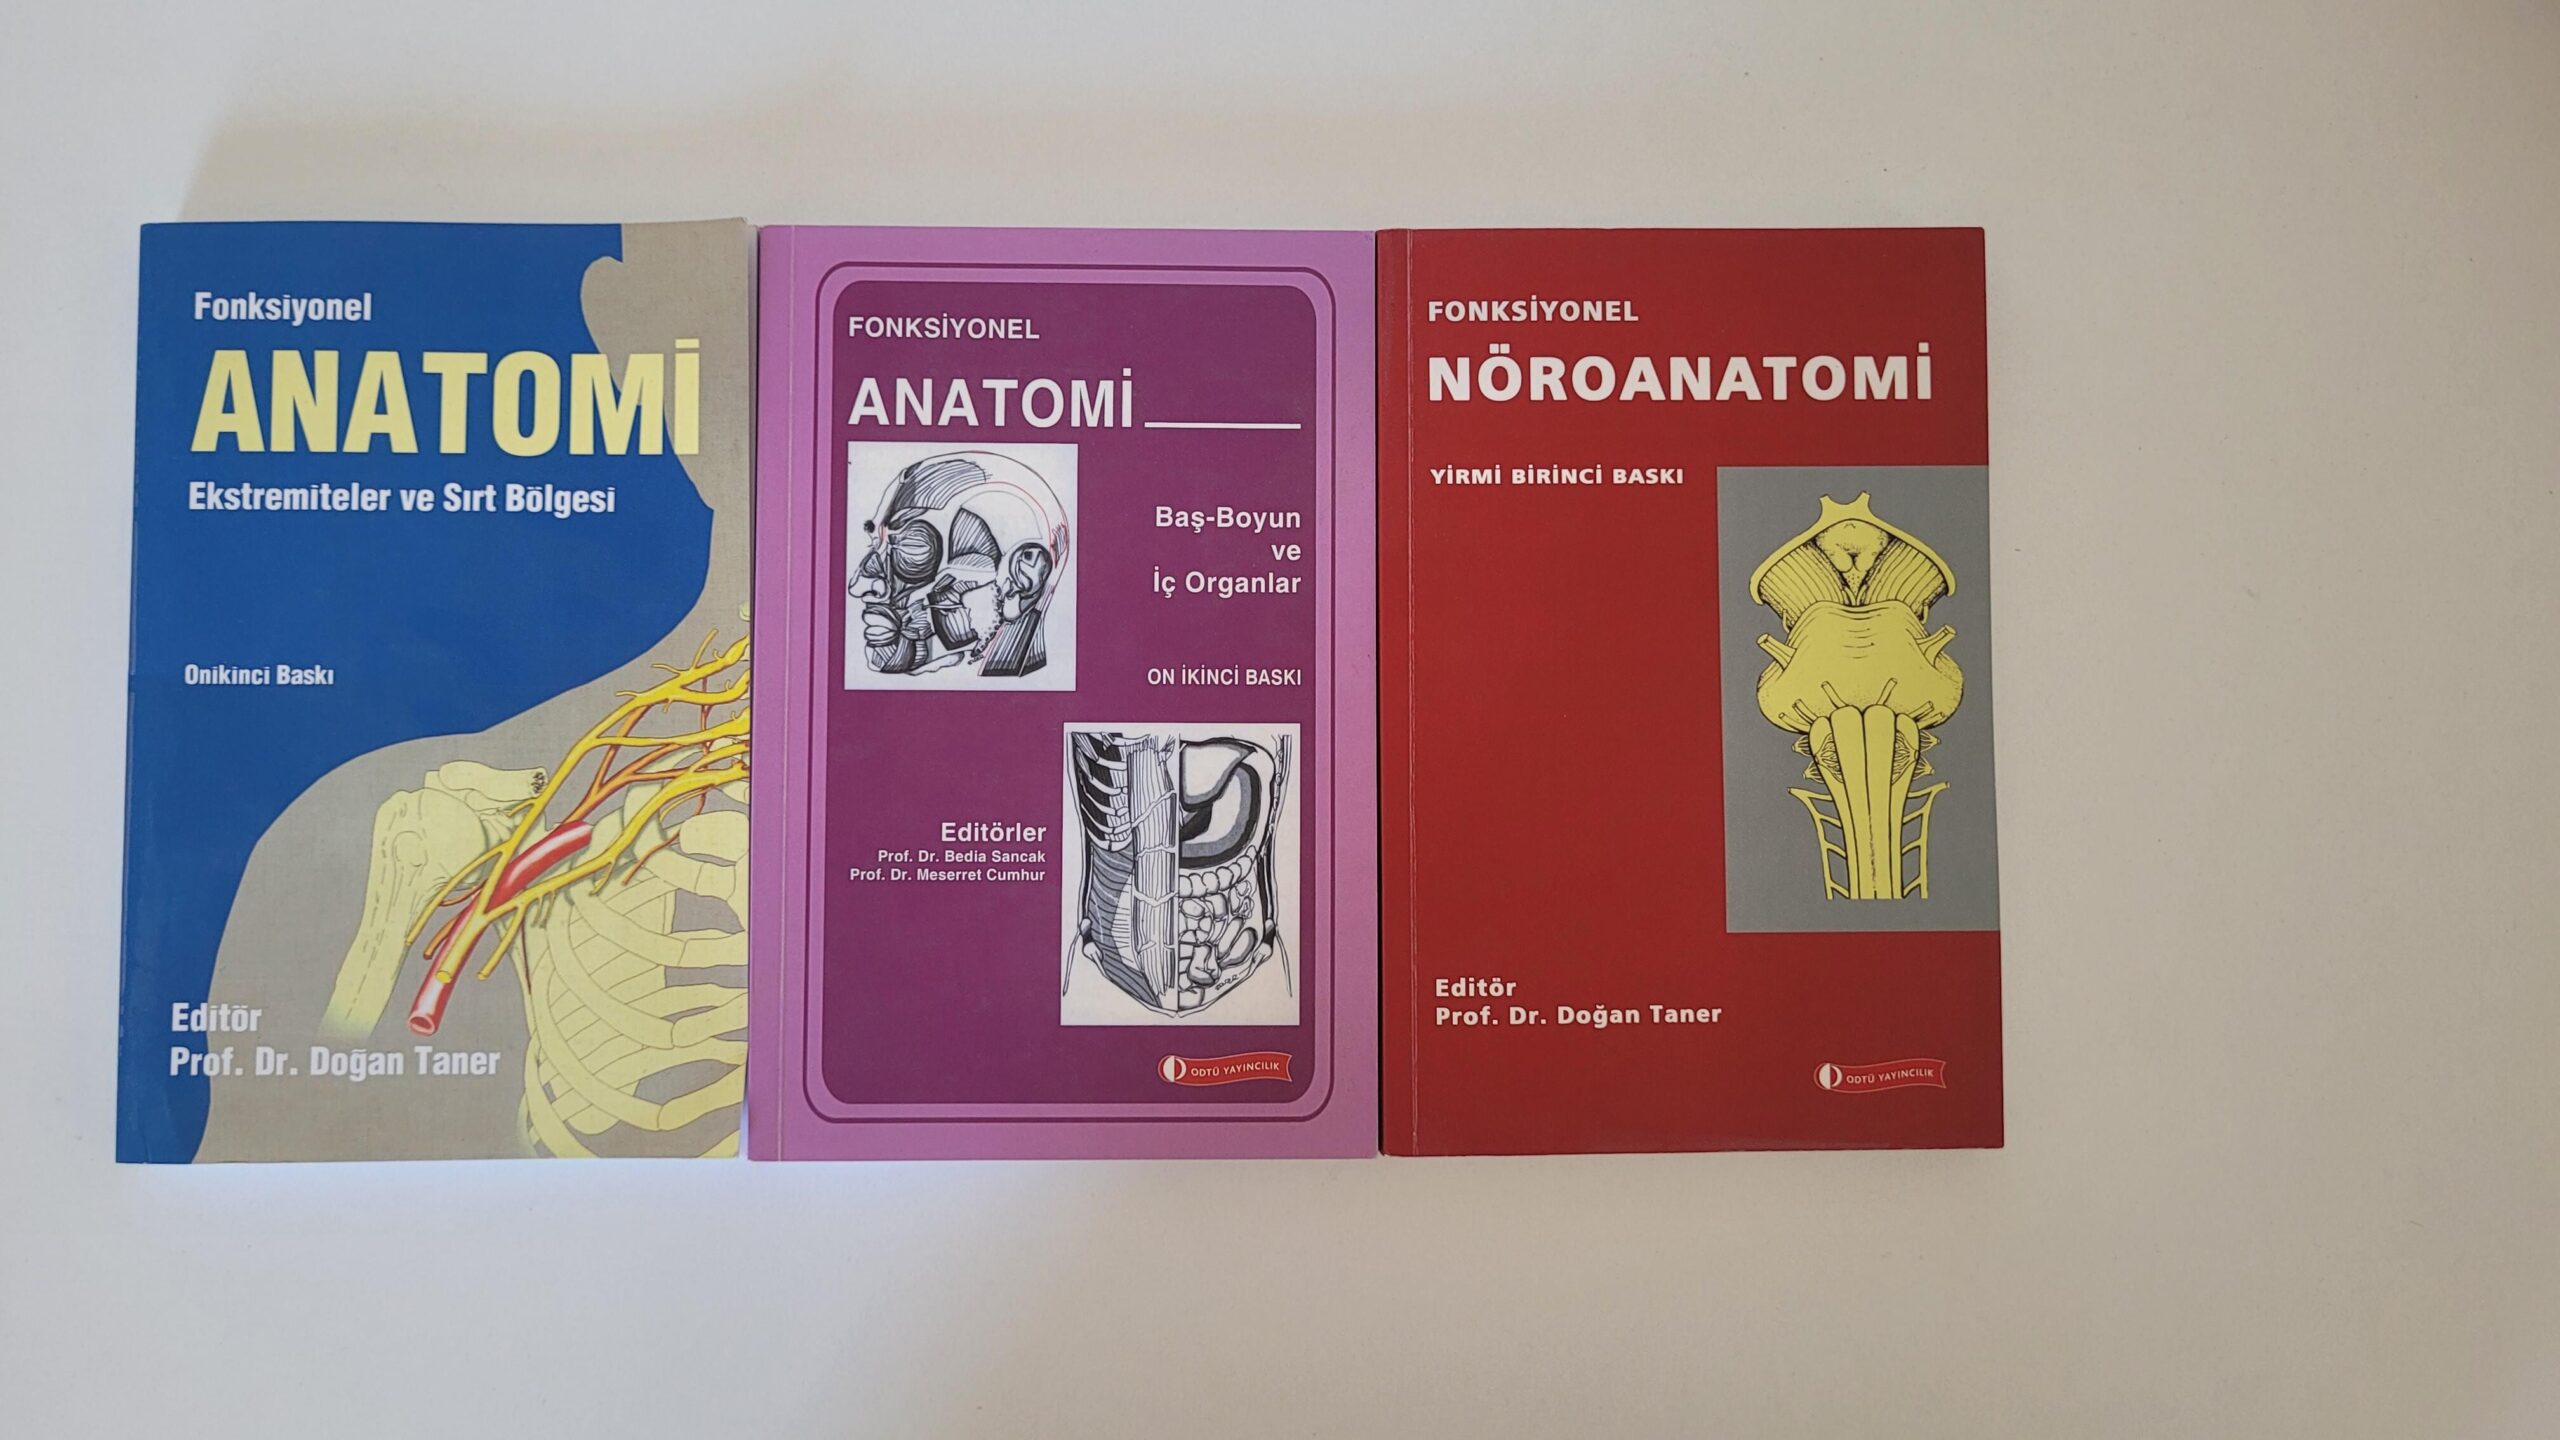 Fonksiyonel anatomi ve nöroanatomi 3 kitap